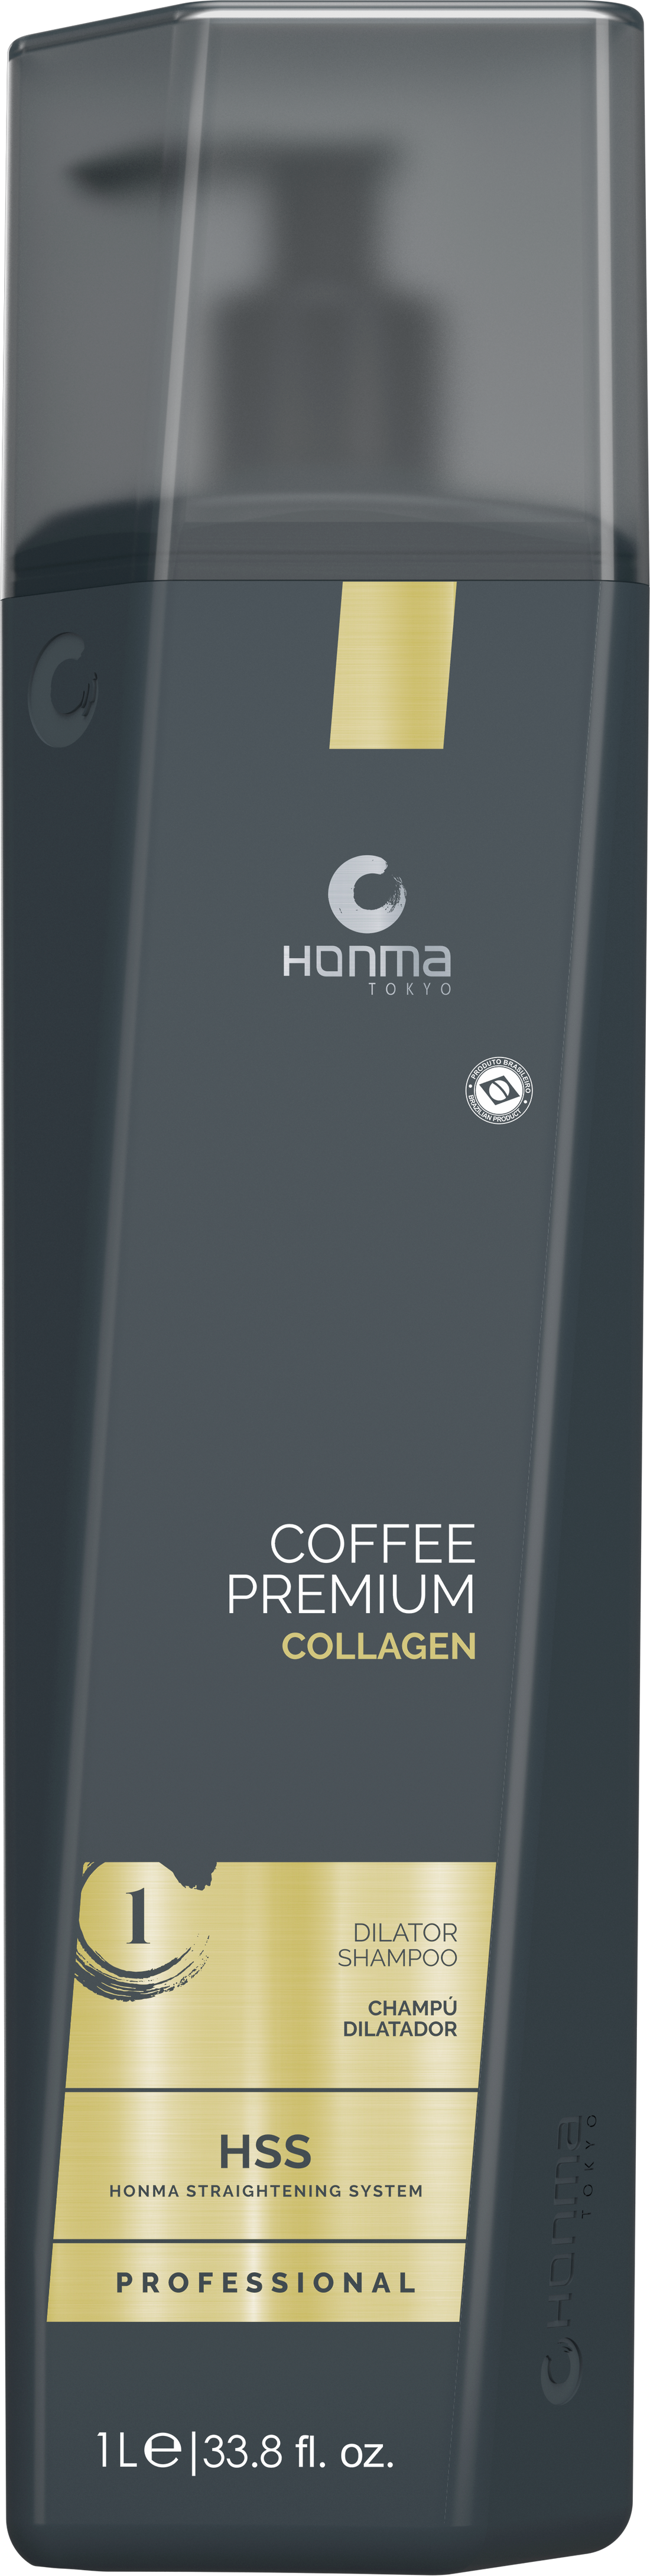 COFFEE PREMIUM COLLAGEN SHAMPOO - PROFESSIONAL